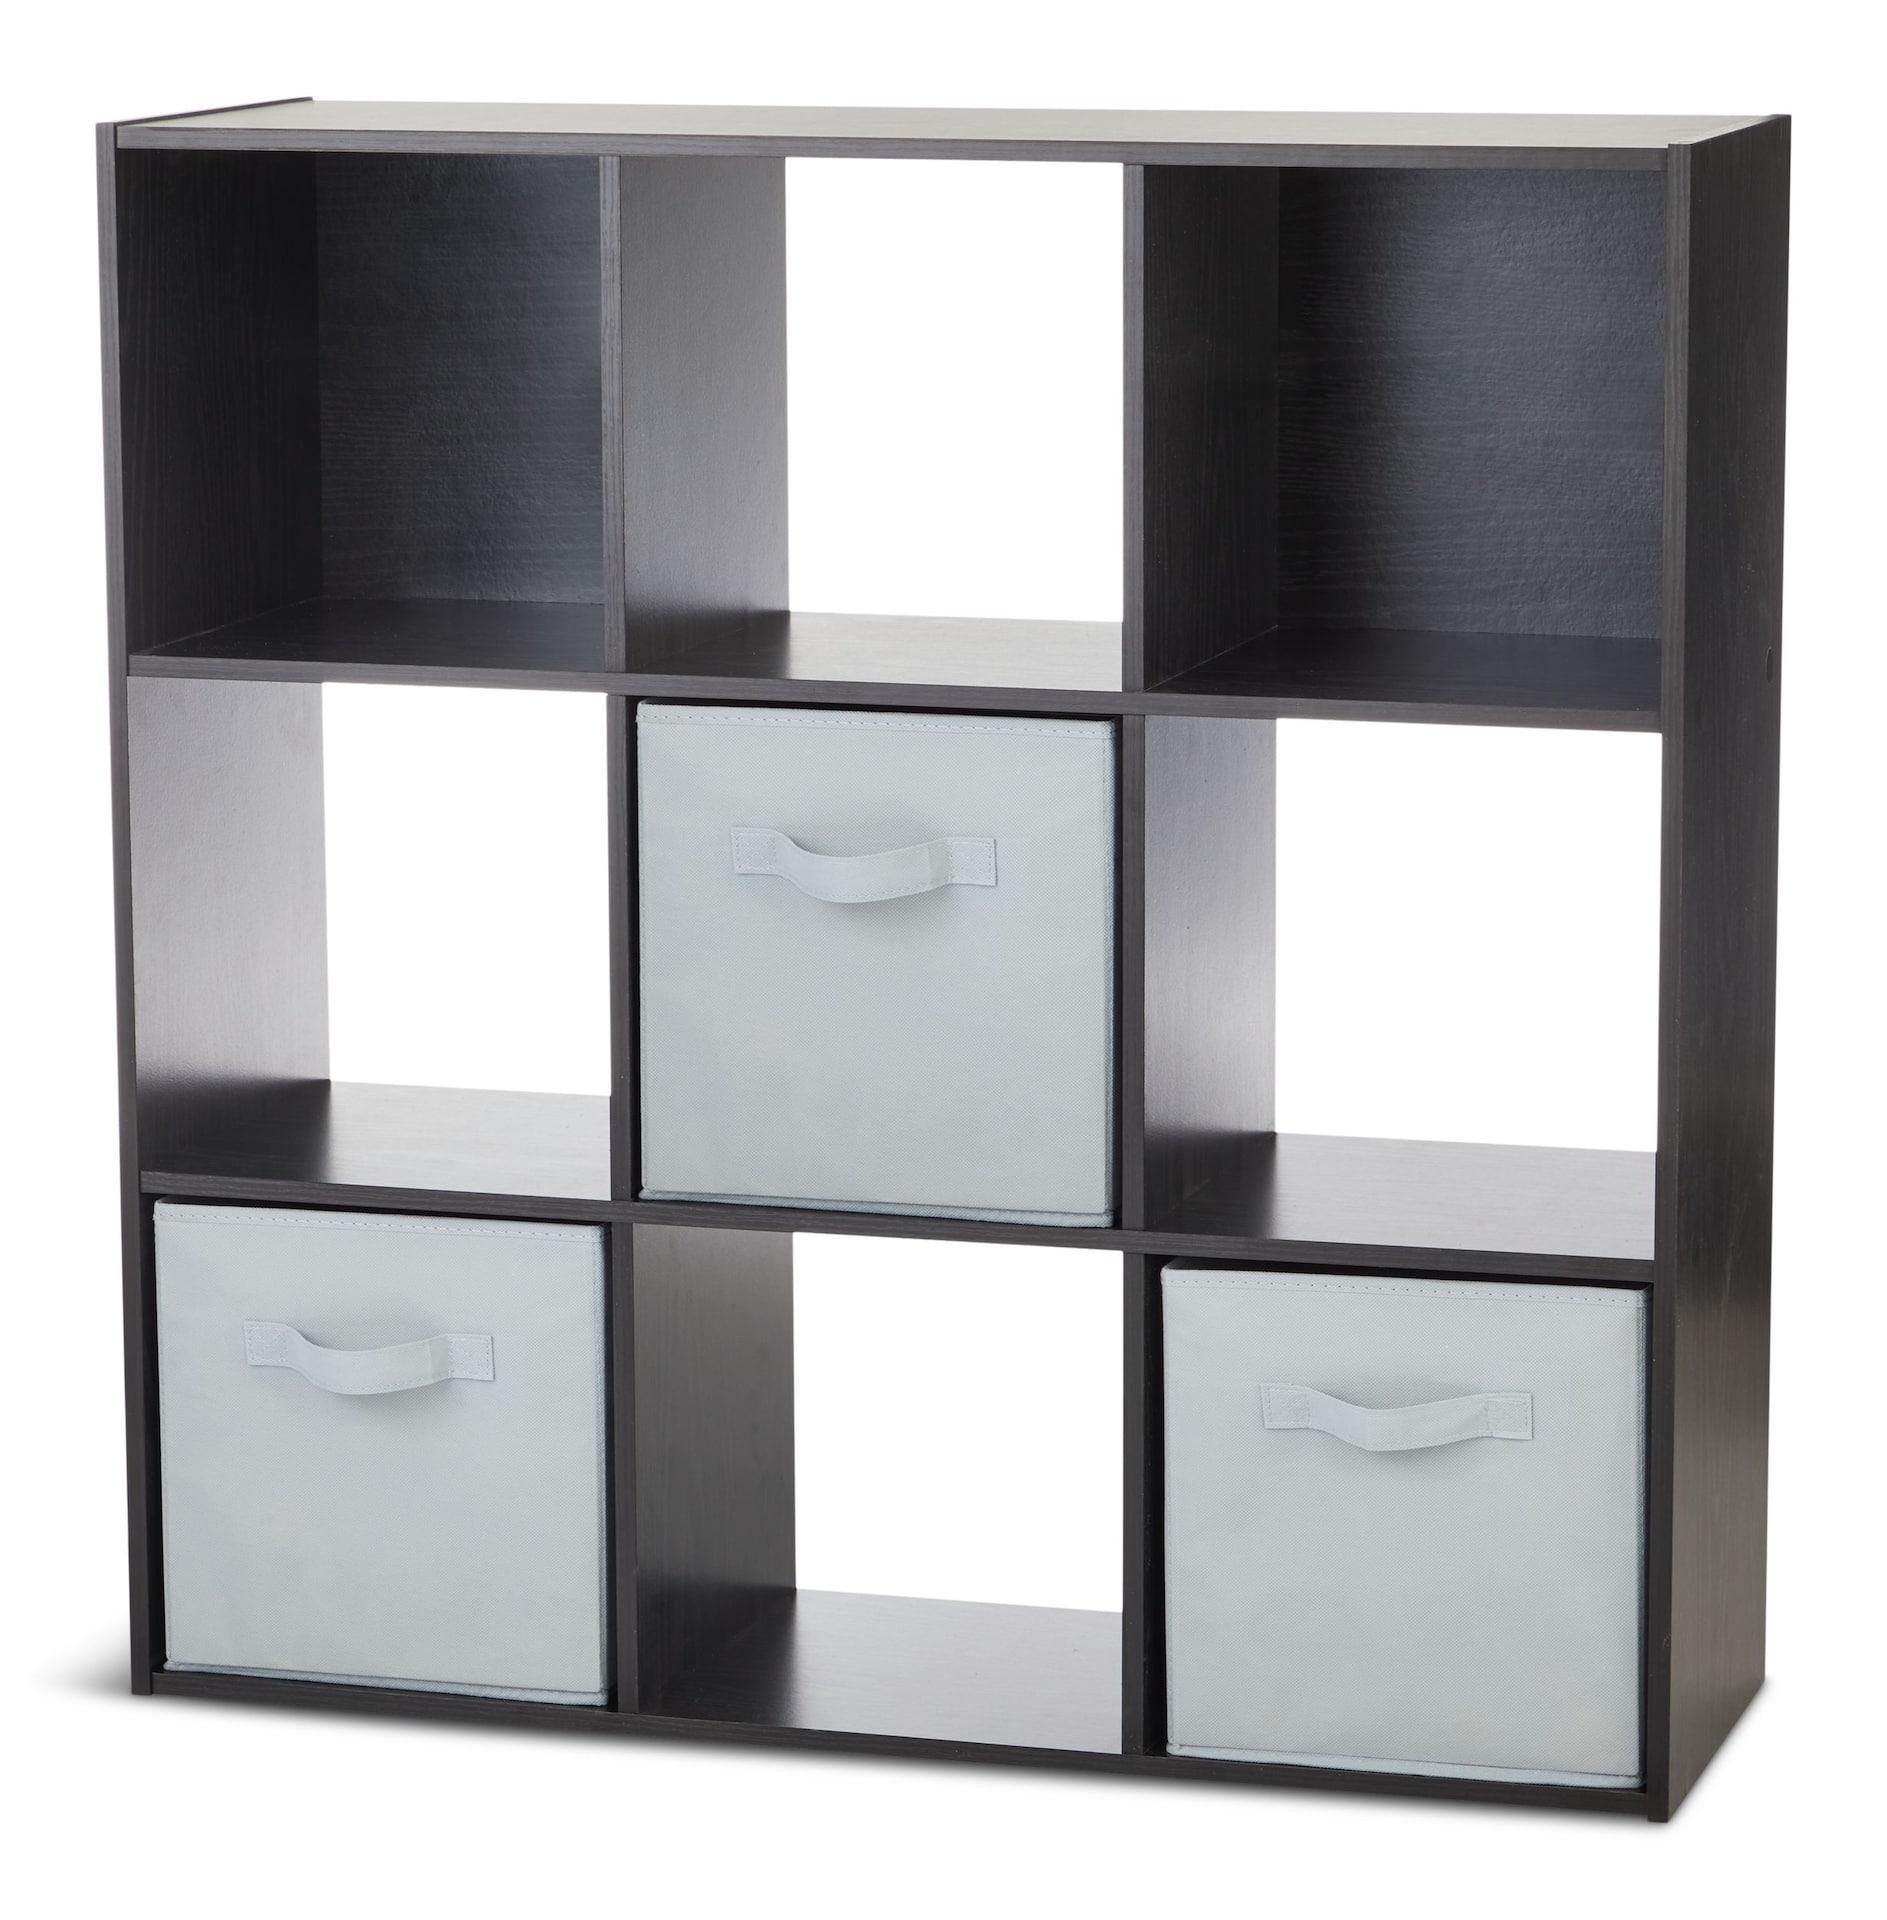 https://media-www.canadiantire.ca/product/living/home-decor/furniture/0680400/for-living-9-cube-cabinet-black-oak-e6ac1085-2735-4a4c-b867-82b616102247-jpgrendition.jpg